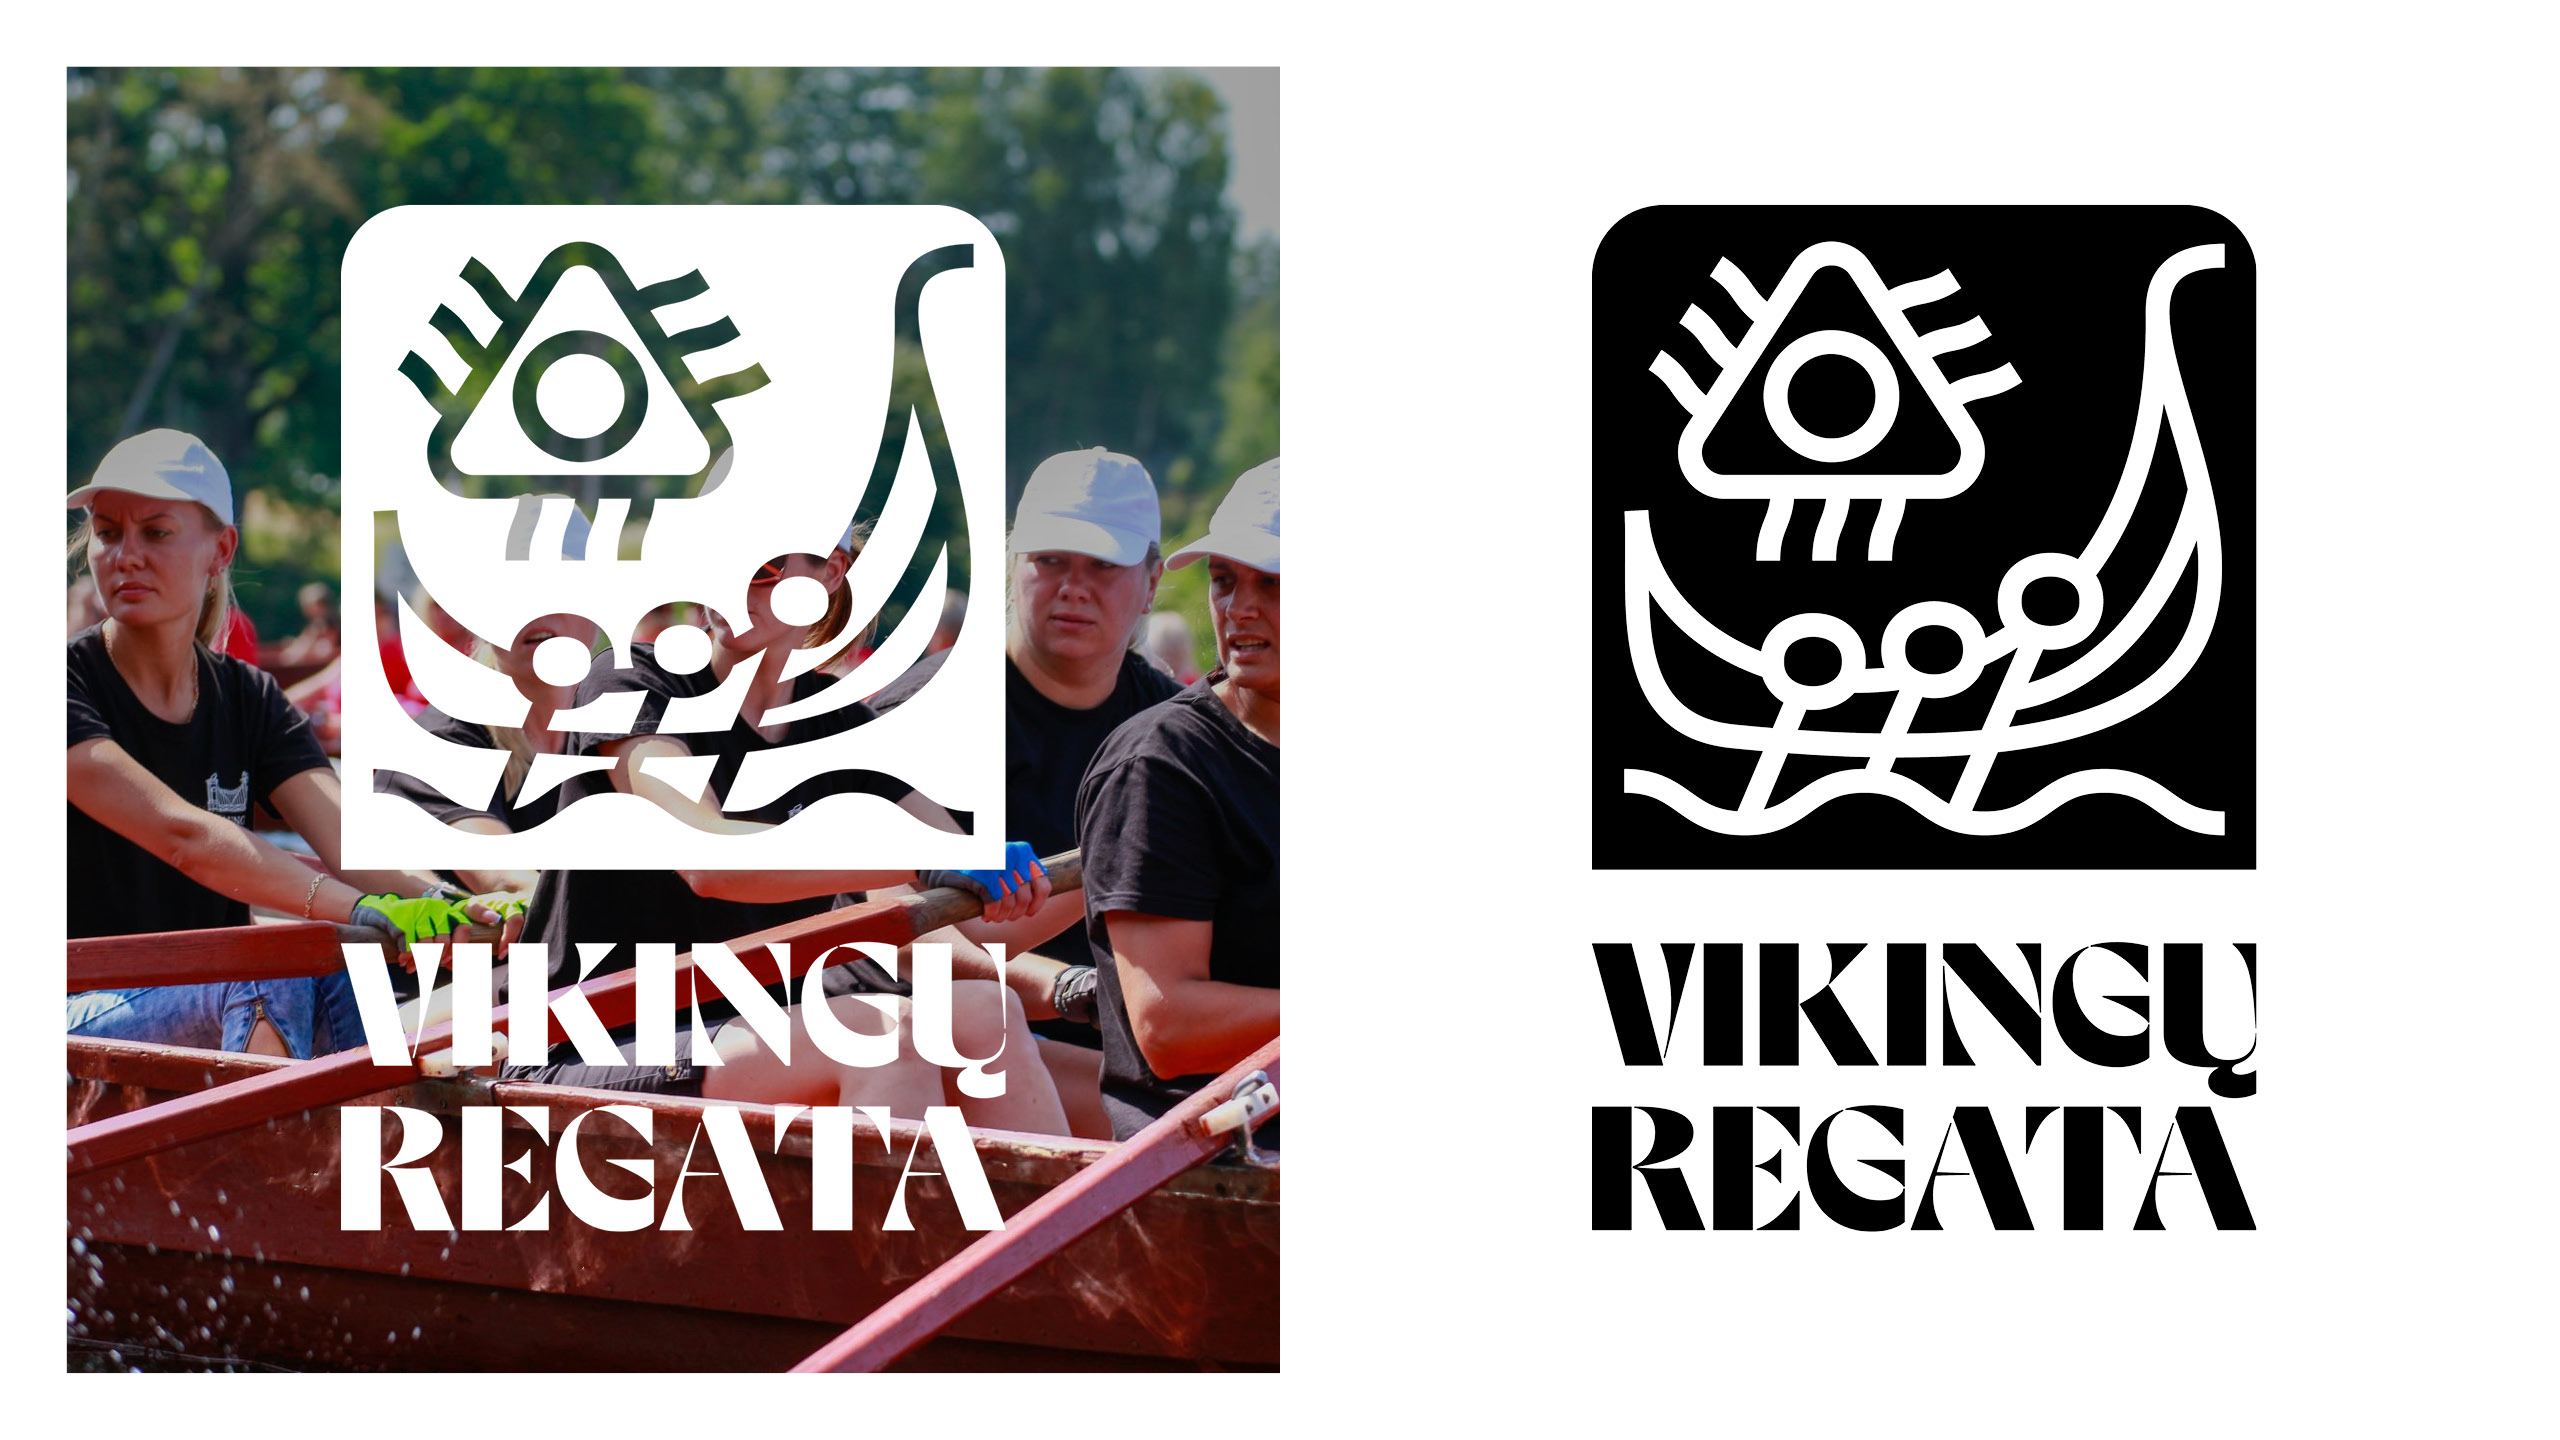 Vikingu Regata logobou design 2